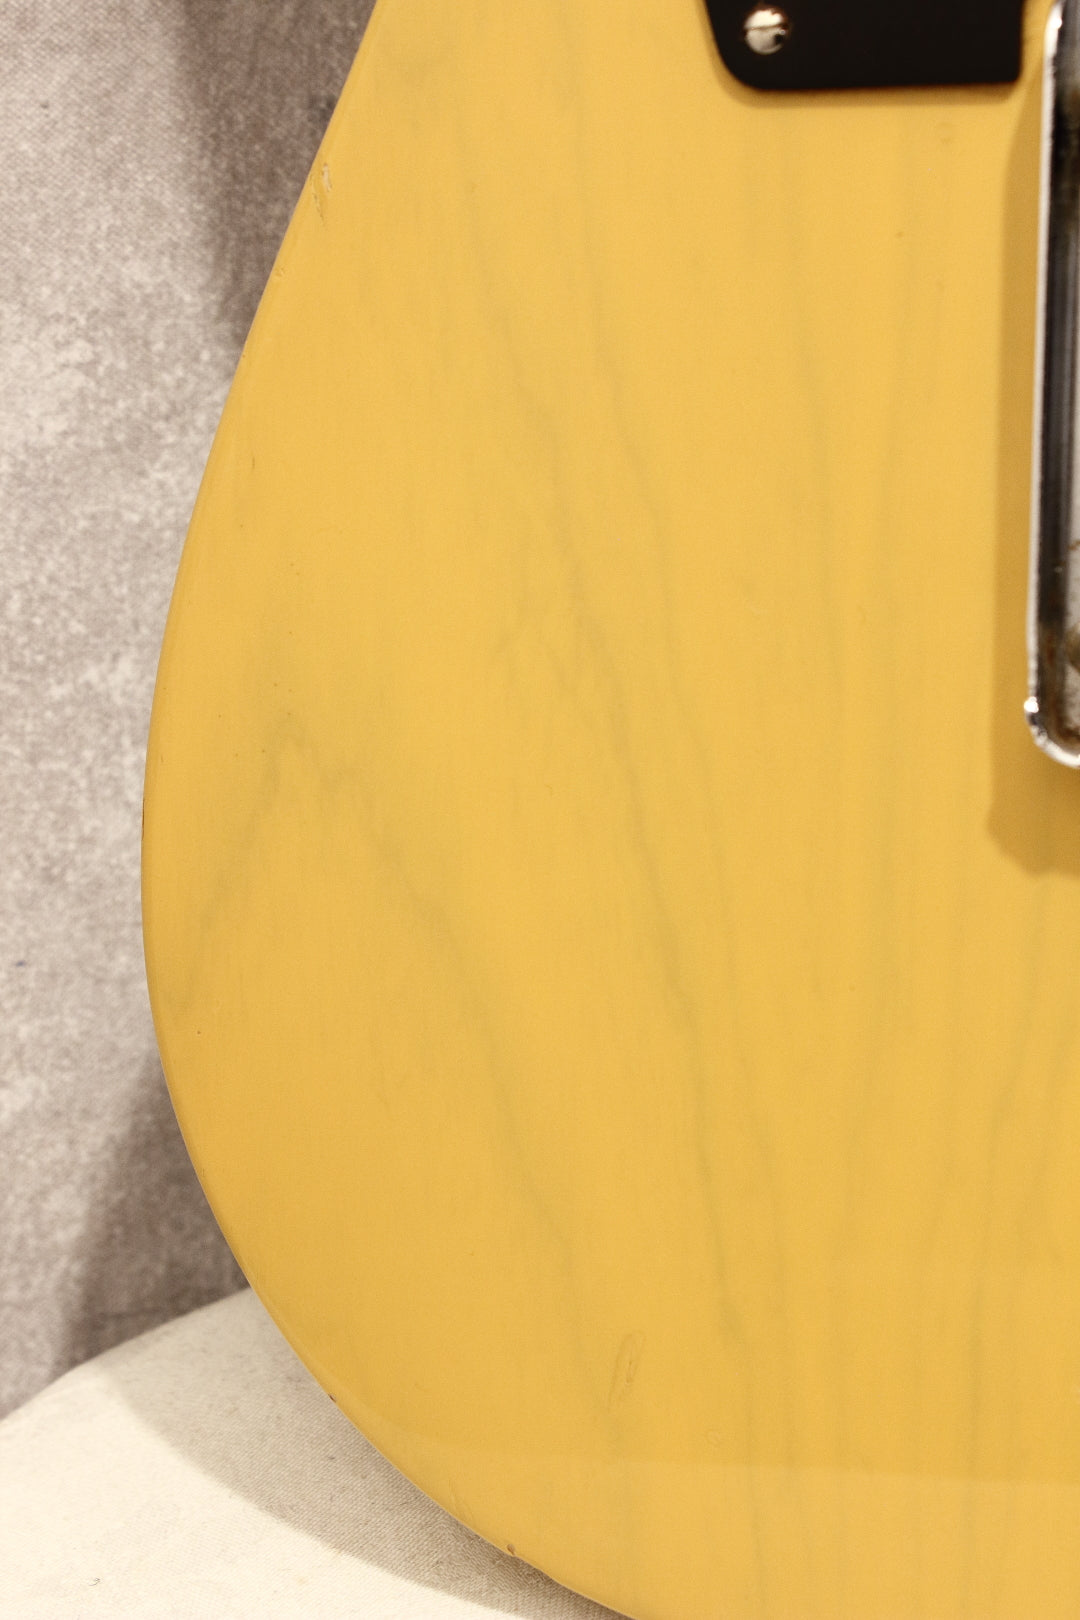 Fender American Vintage '52 Telecaster Butterscotch 2011